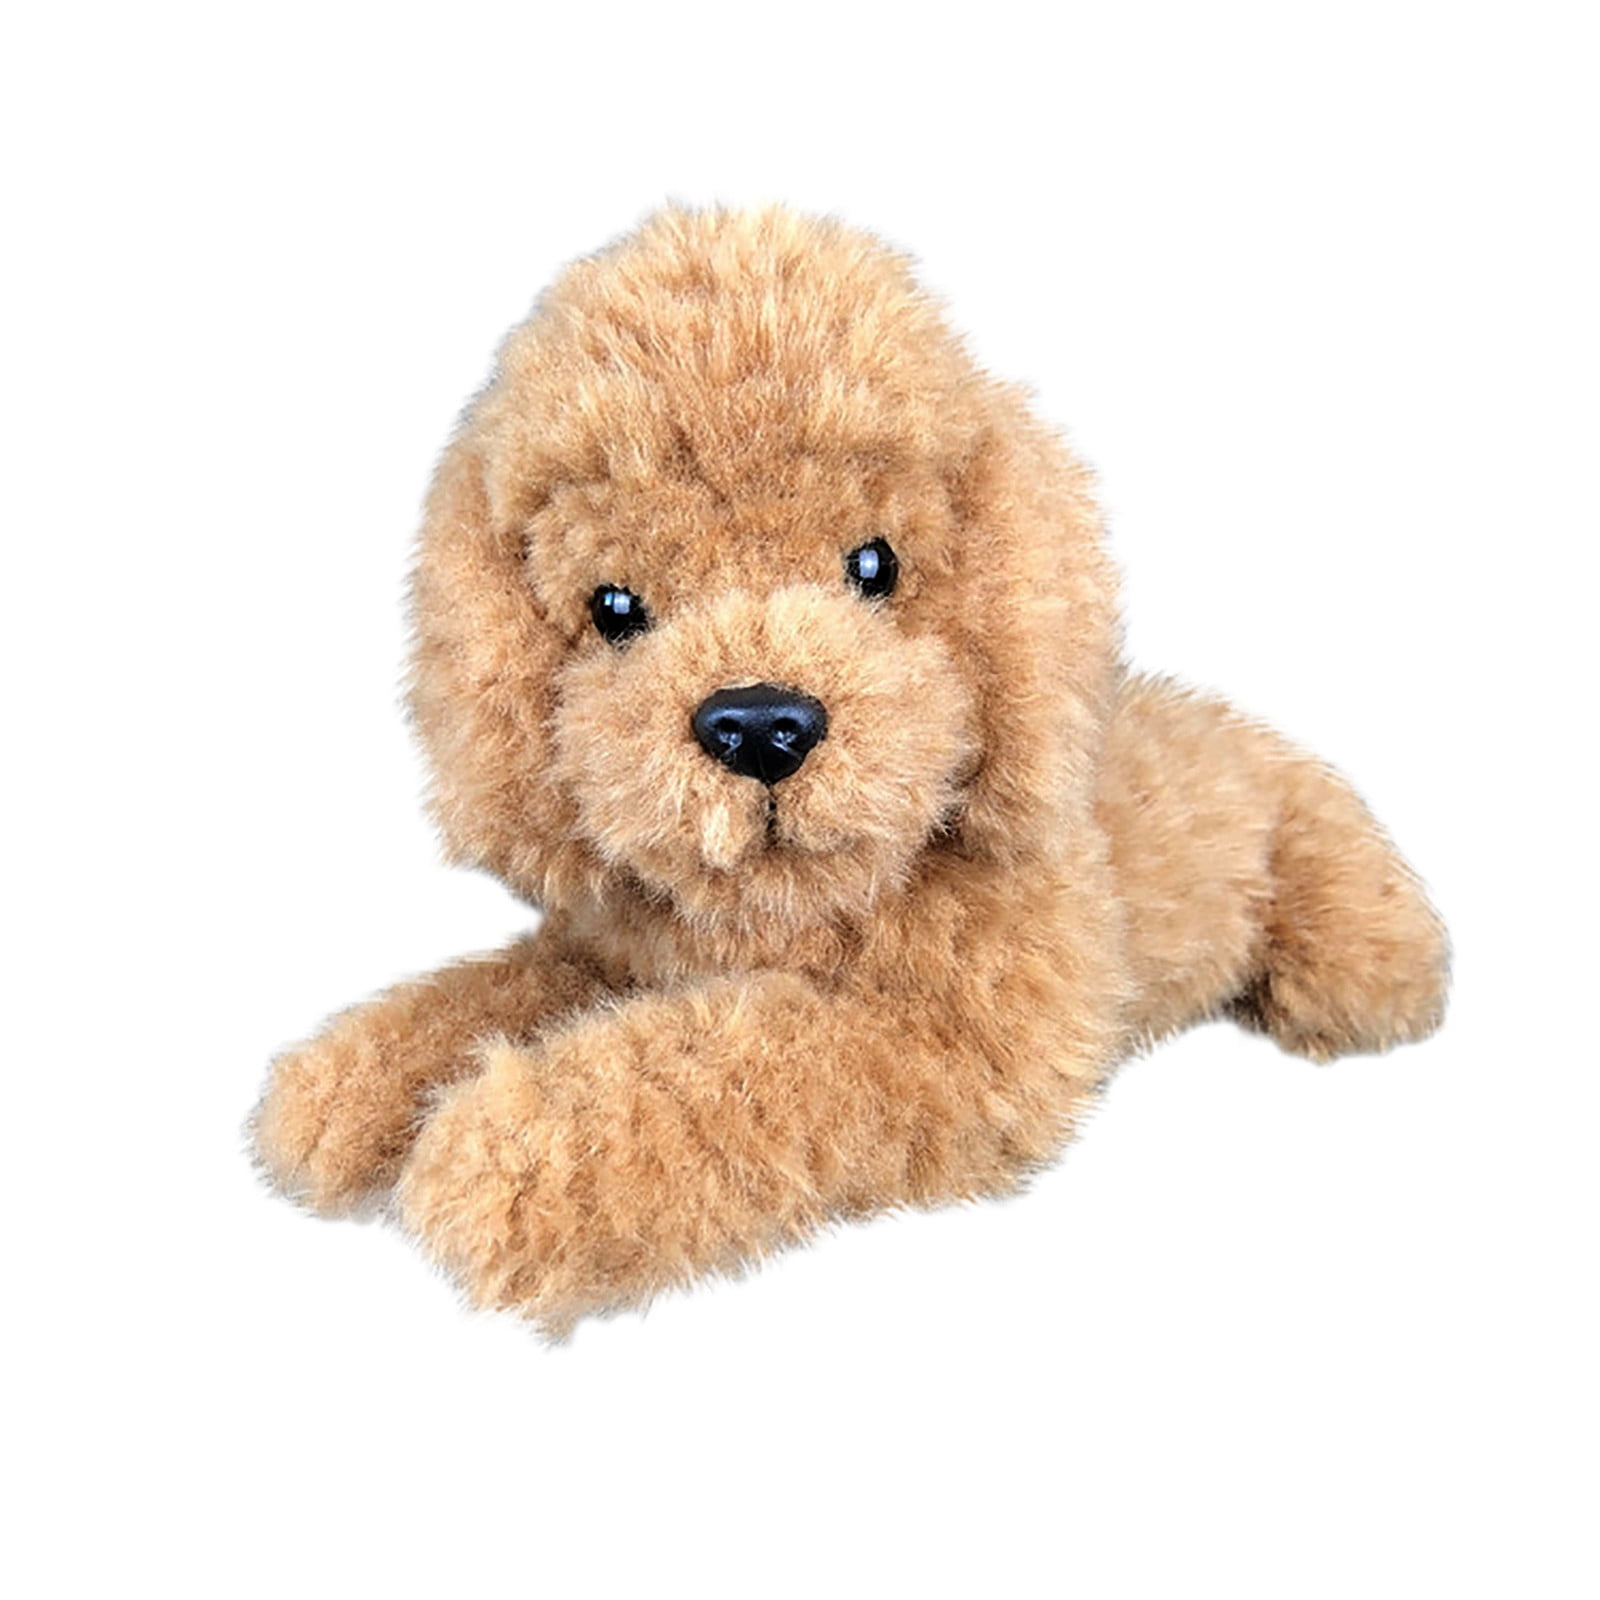 Realistic Collectors Edition Stuffed Animal Auswella Samoyed Plush Dog 